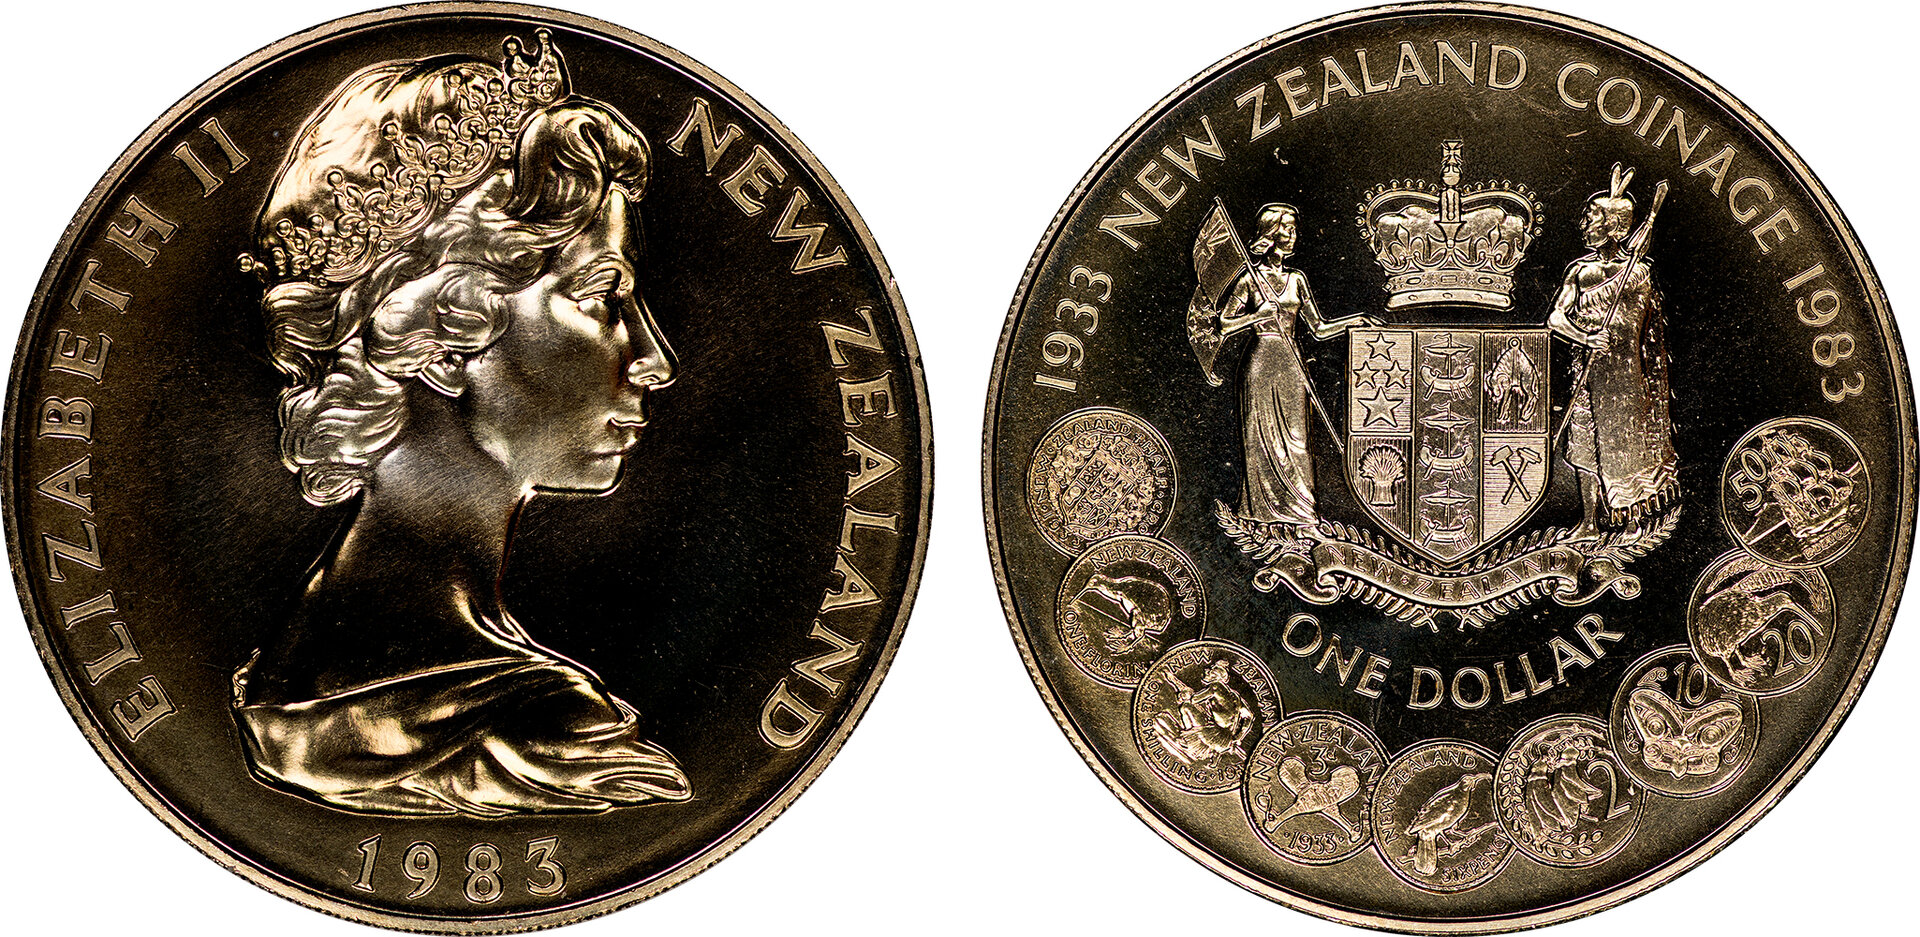 New Zealand - 1983 1 Dollar (Coinage).jpg